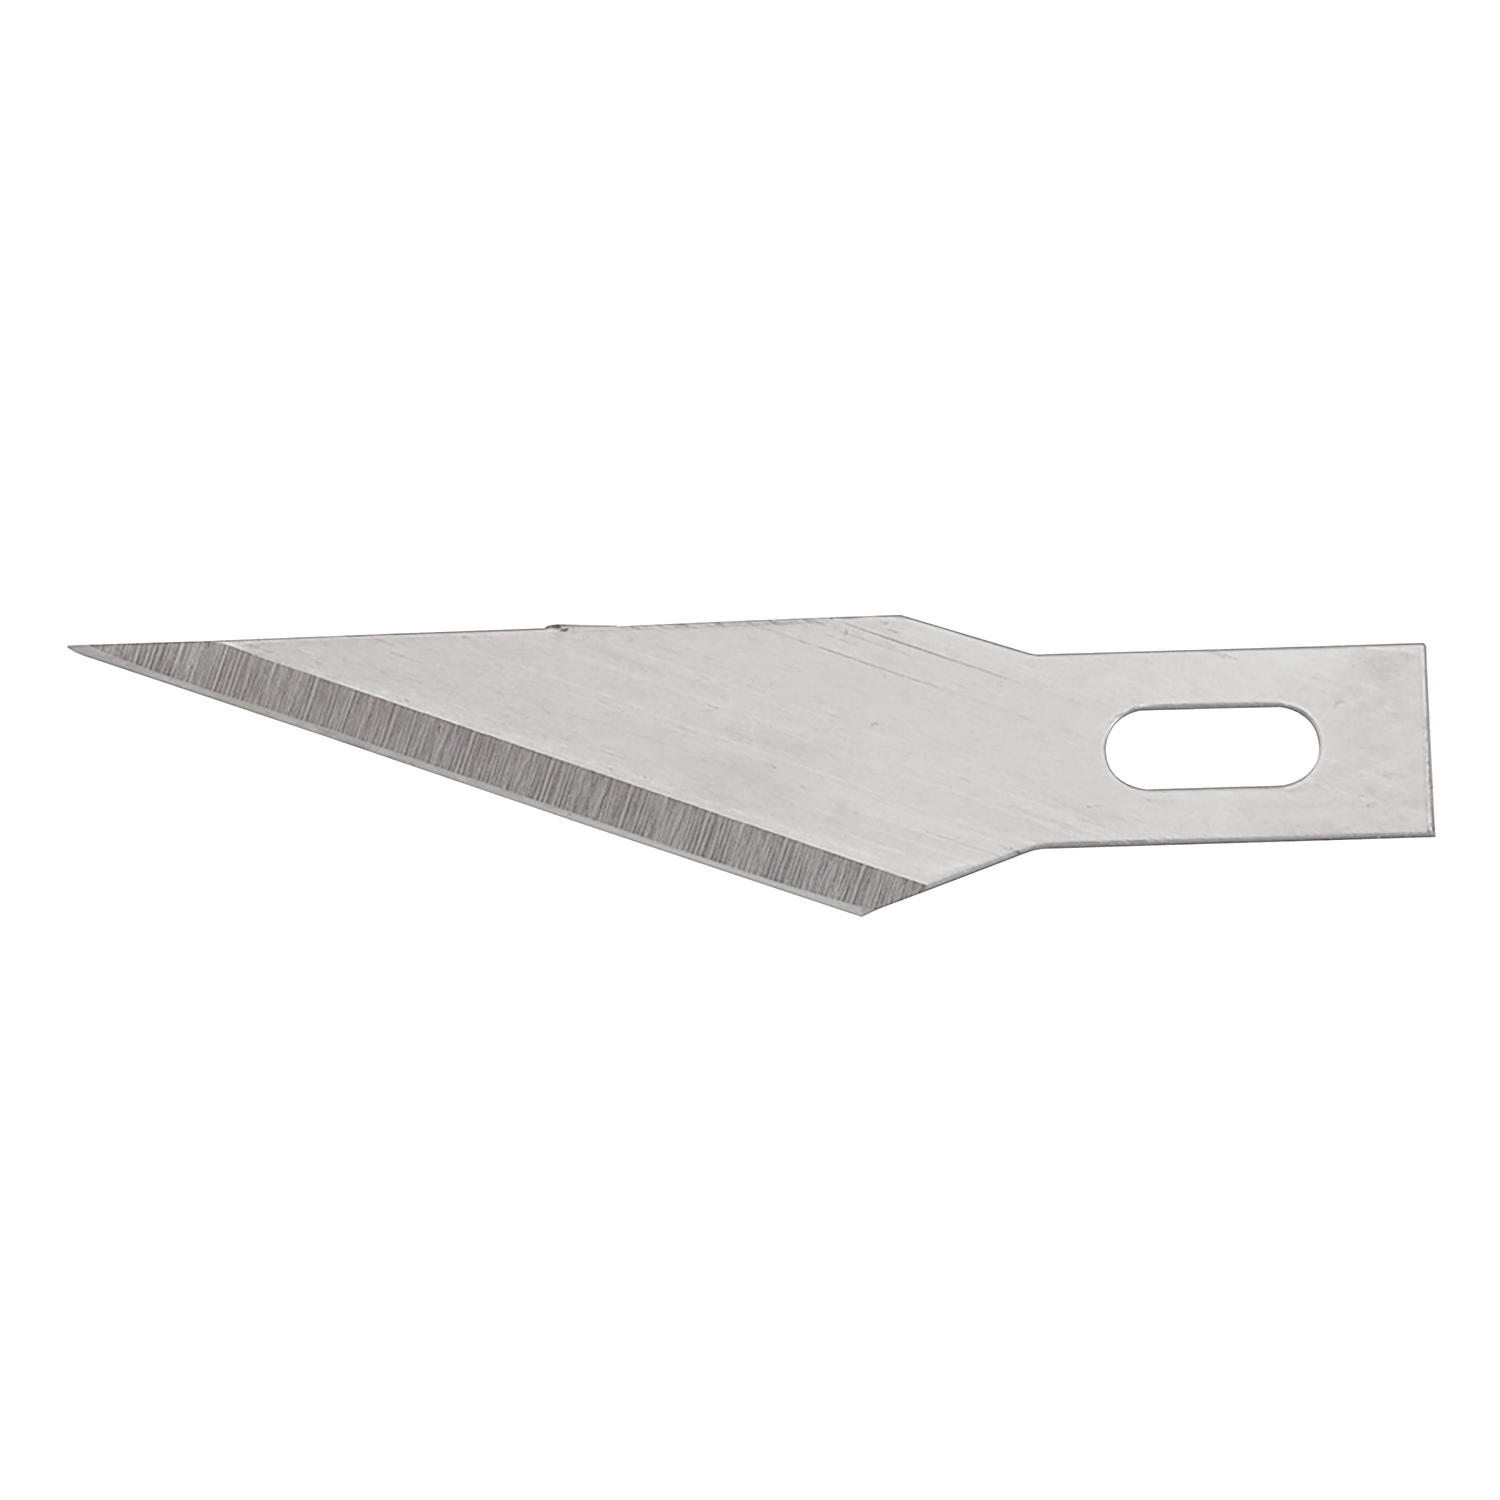 Scalpel Knife No.36 Tick Remover - Gear Swifts